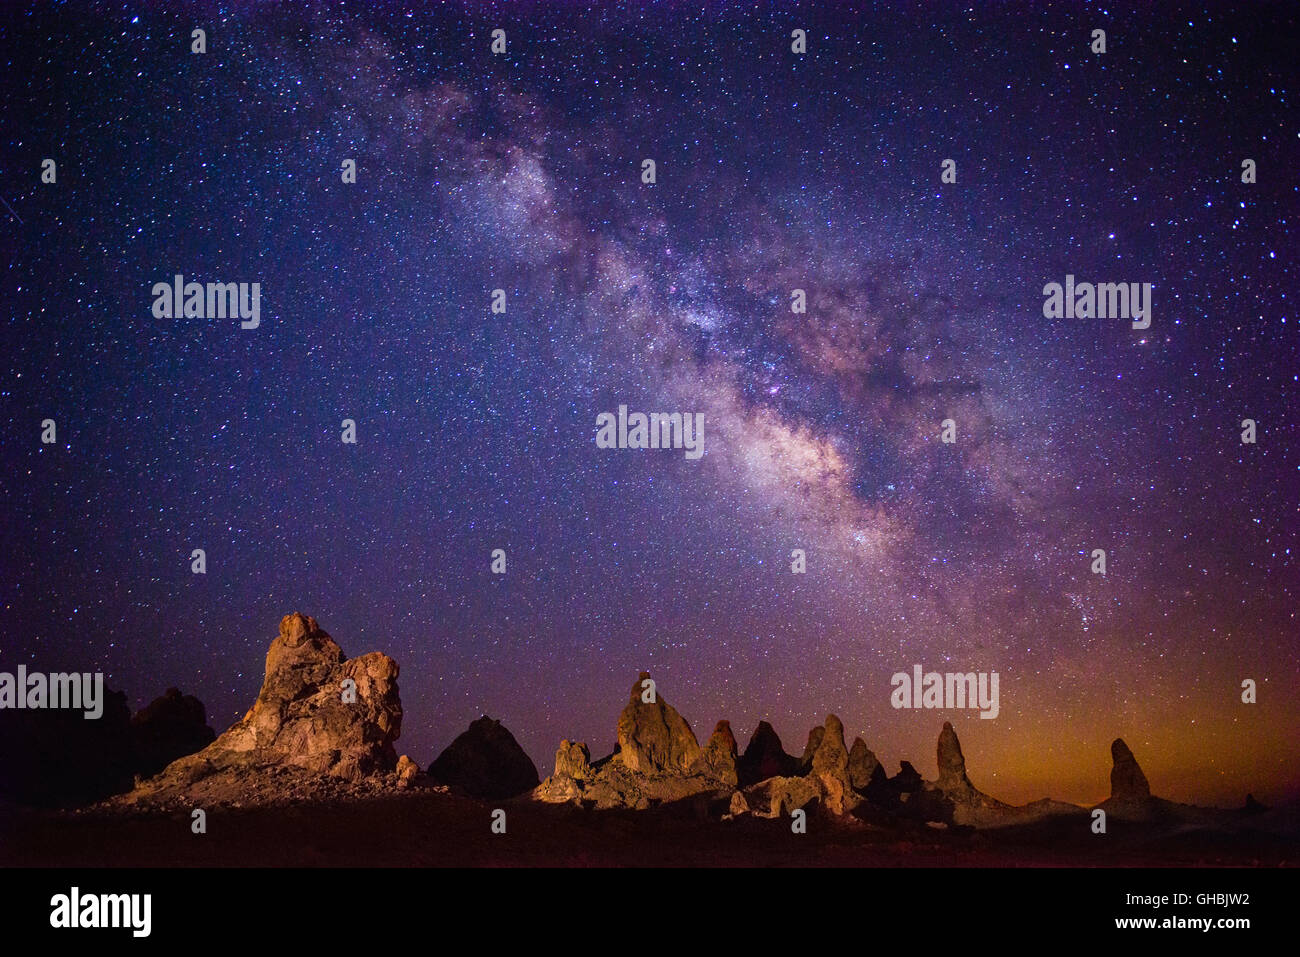 The Milky Way Galaxy over the Trona Pinnacles in California. Stock Photo